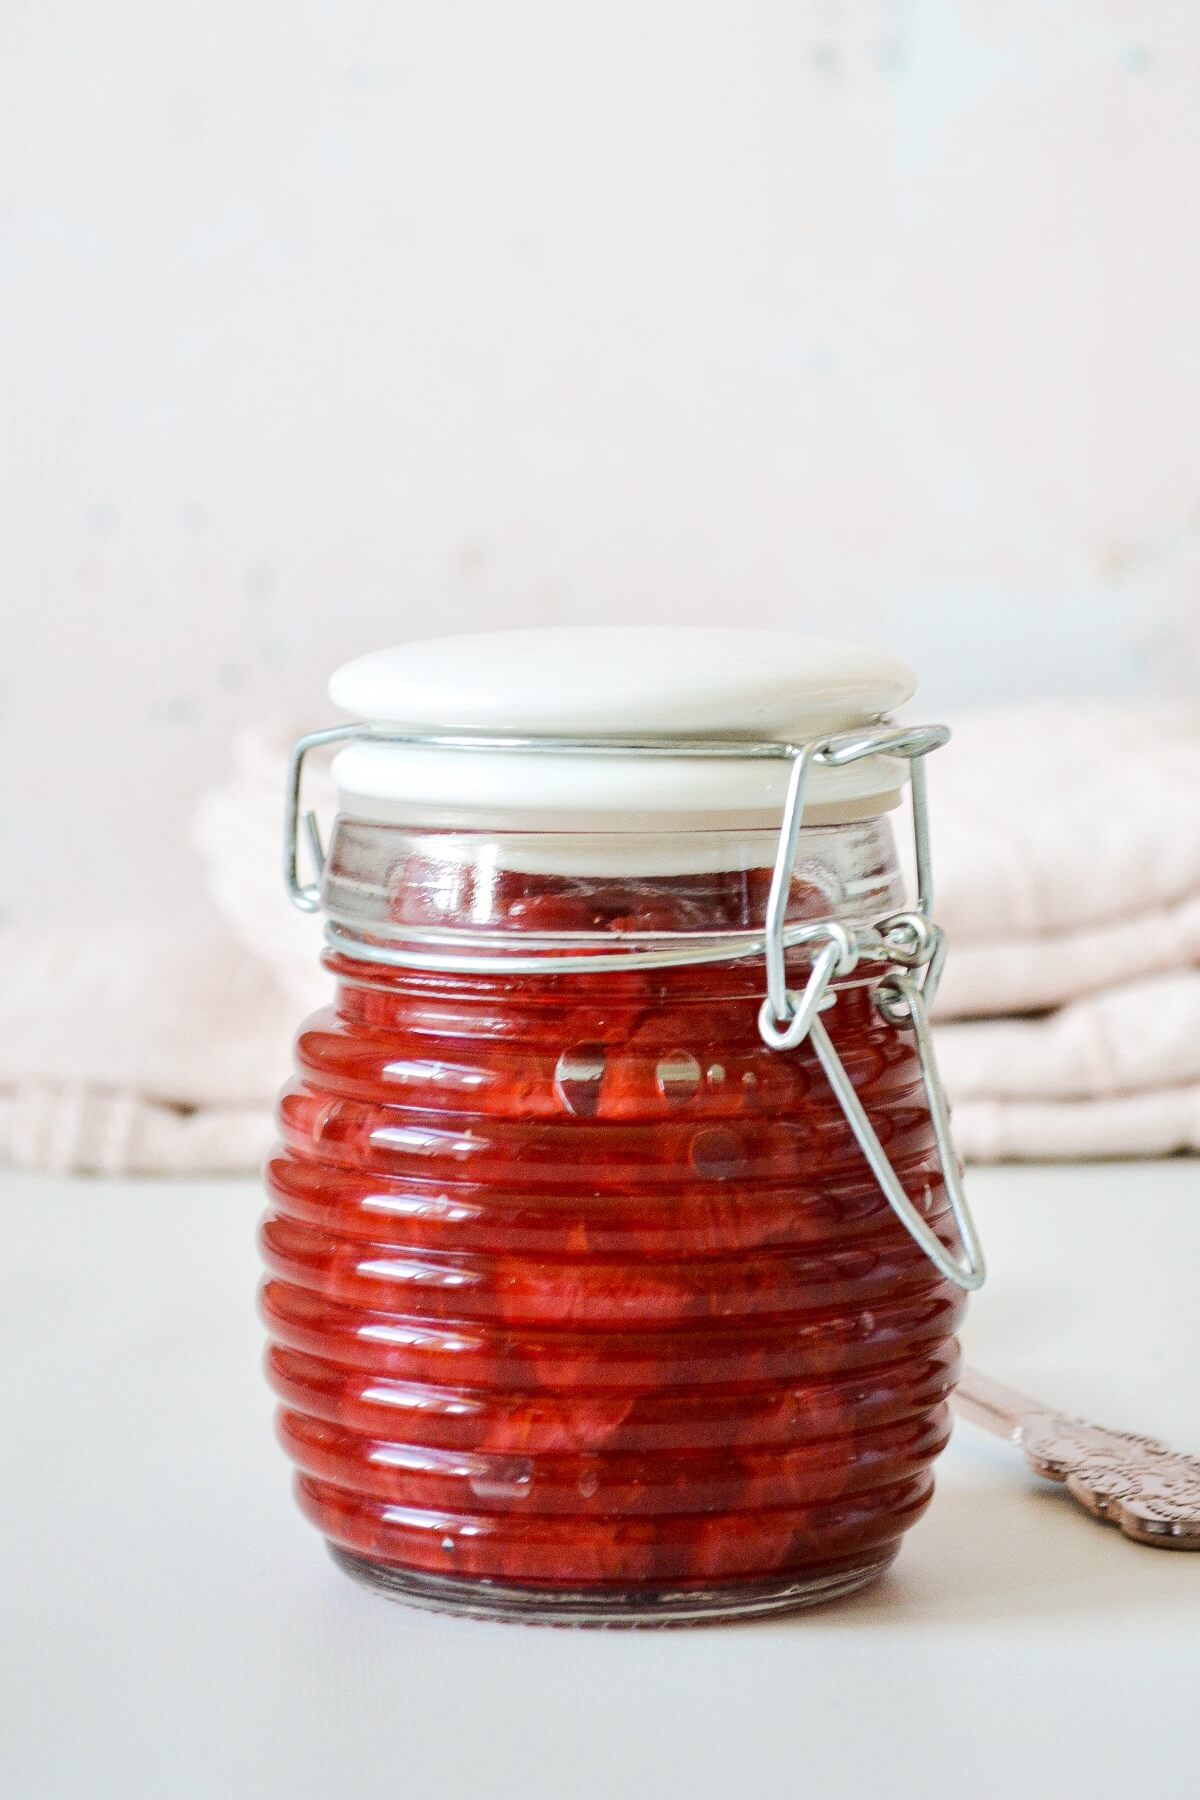 A glass jar of strawberry sauce.